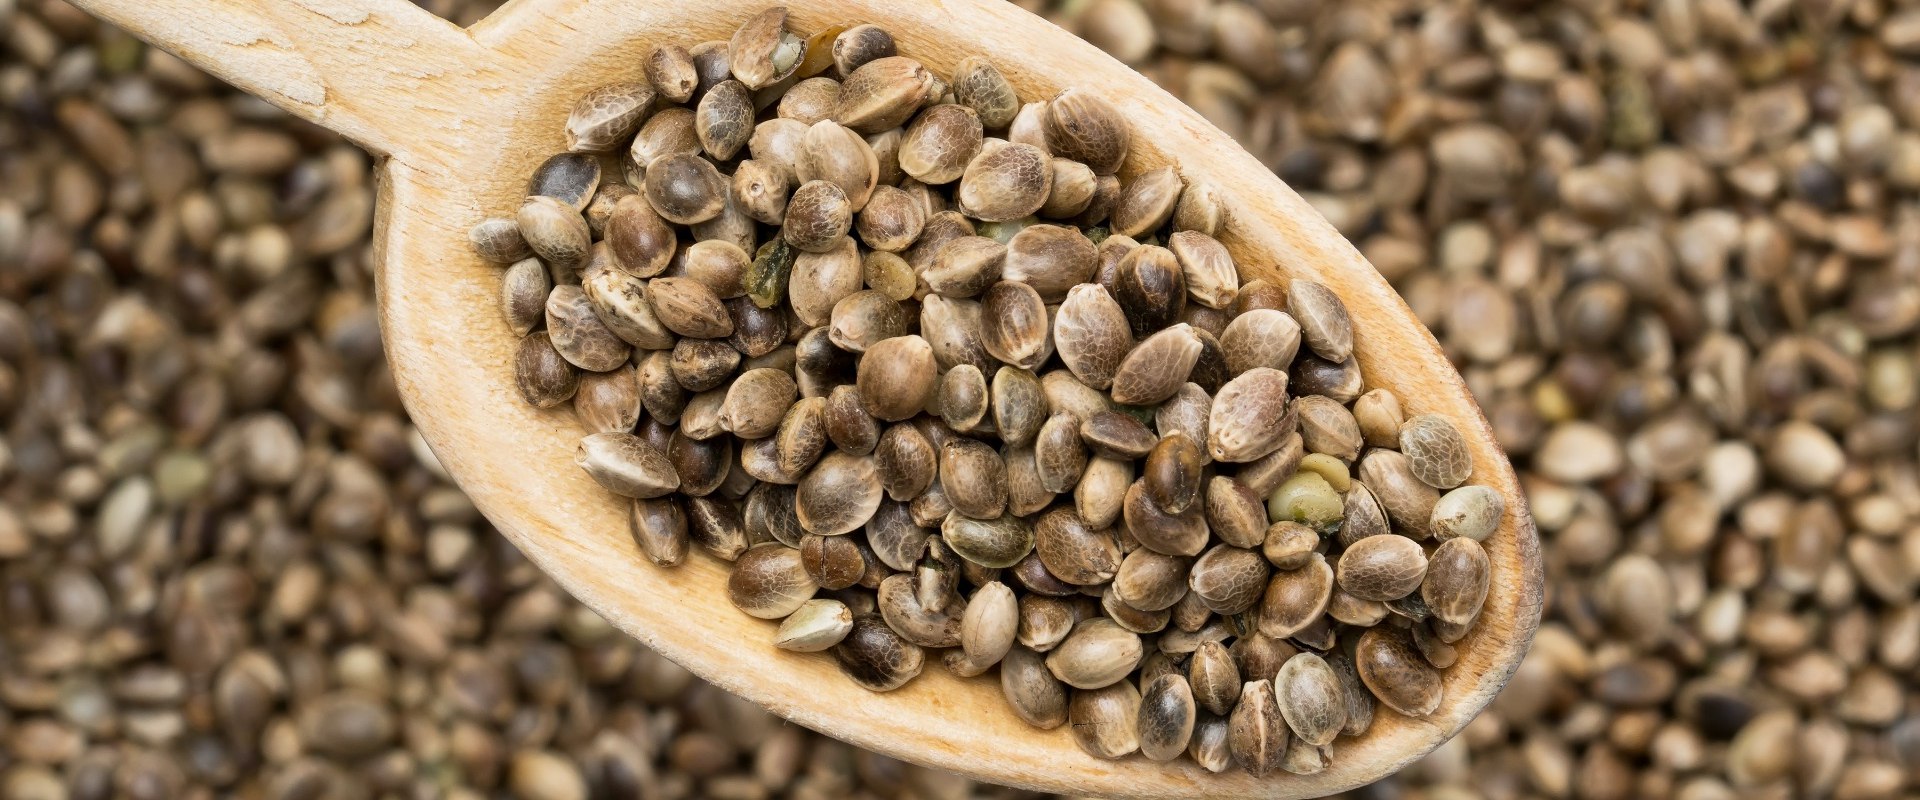 Can You Fail a Drug Test from Hemp Seed Oil?